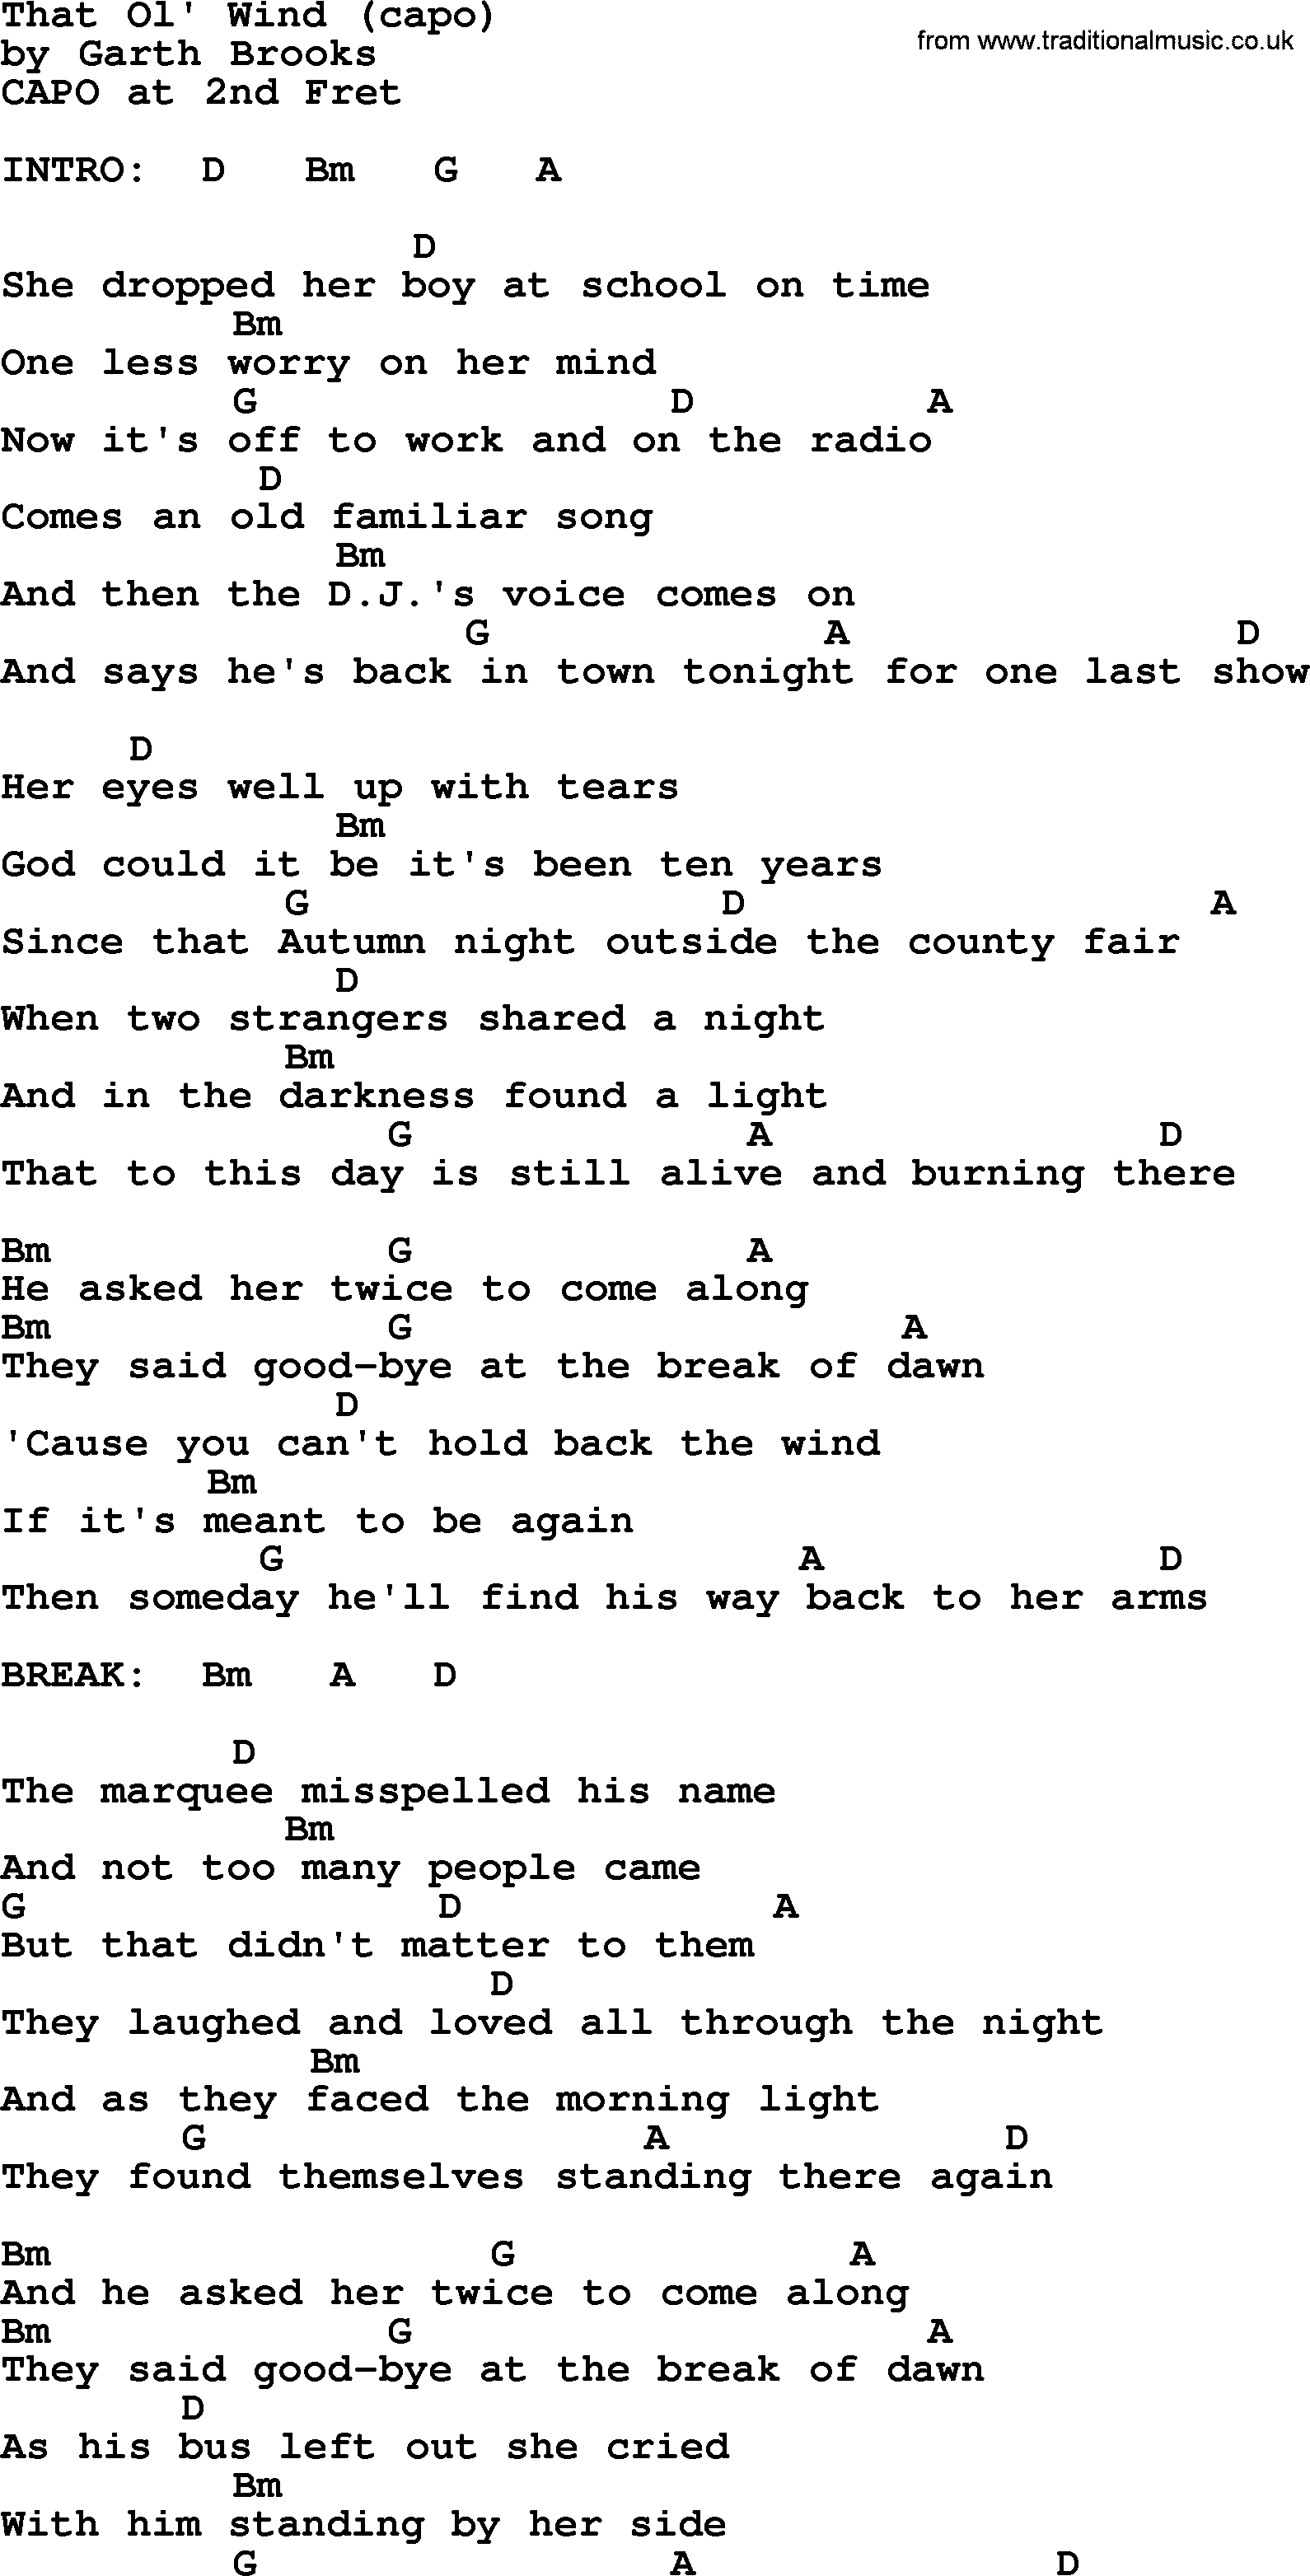 Garth Brooks song: That Ol' Wind (capo), lyrics and chords